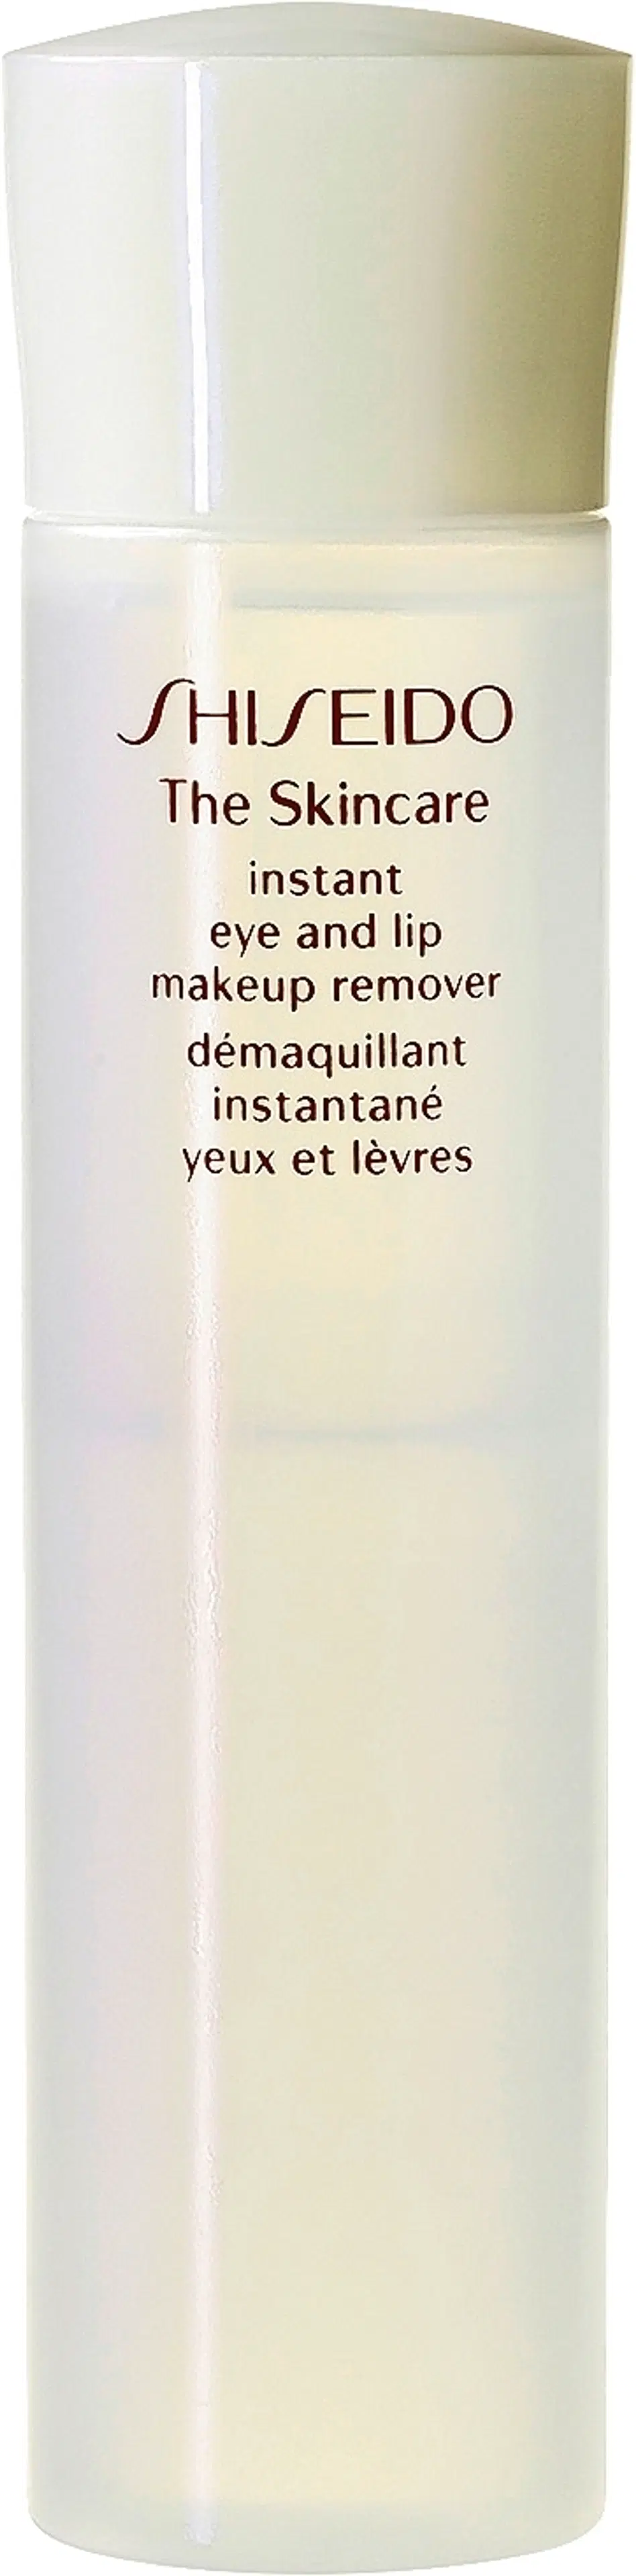 Shiseido The Skincare Instant Eye and Lip Makeup Remover silmämeikinpoistoaine 125 ml